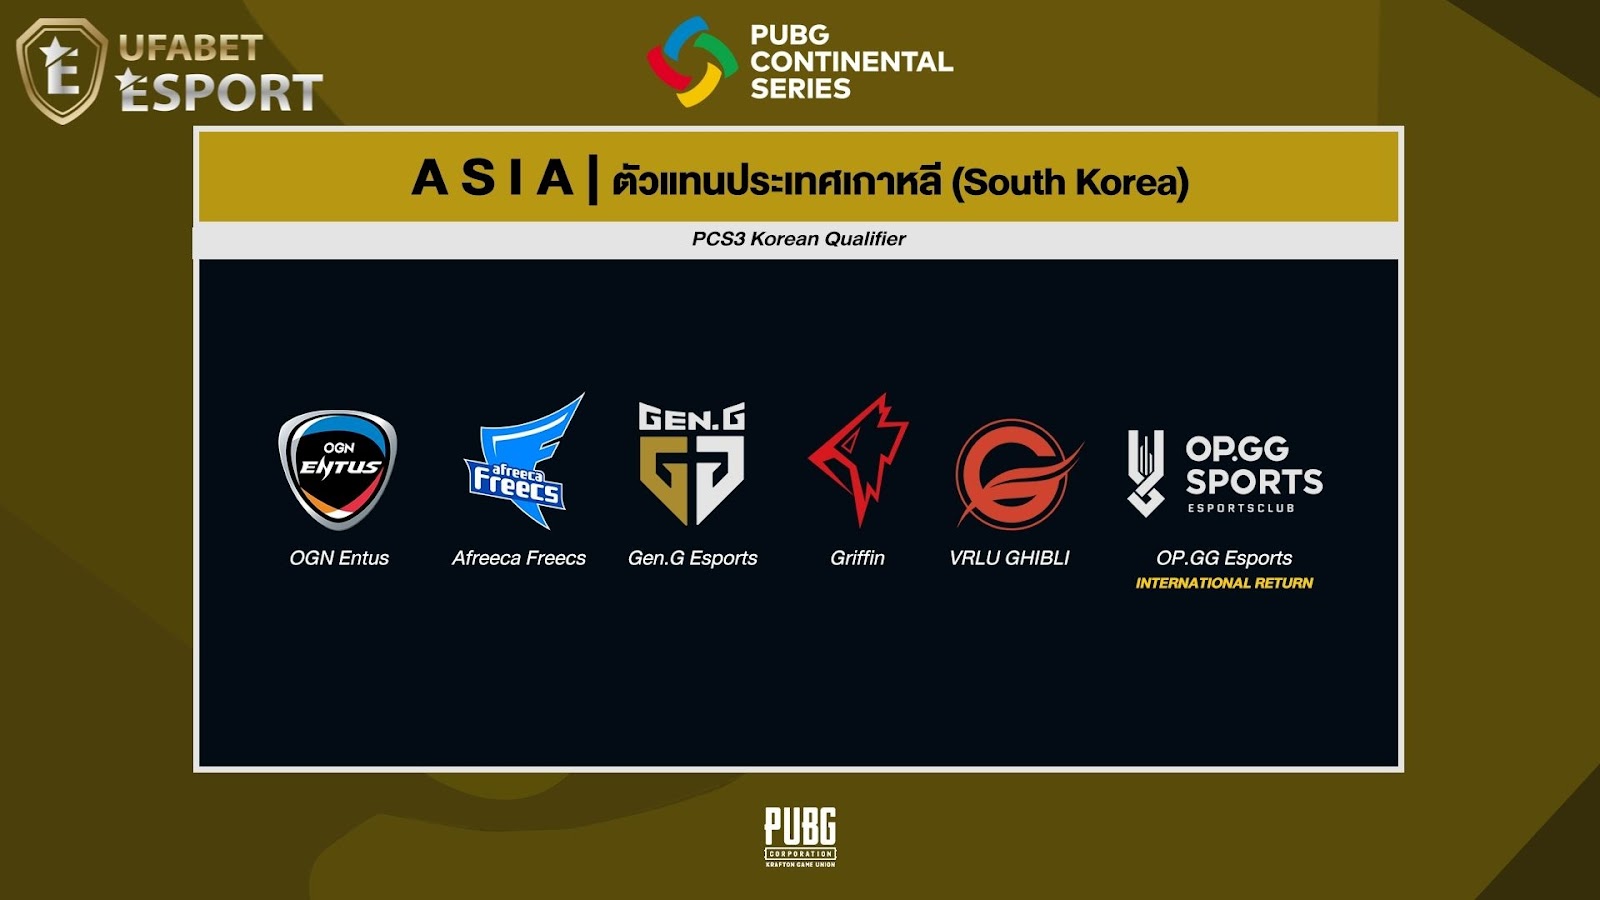 PUBG Continental Series 3 - Korean Qualifier